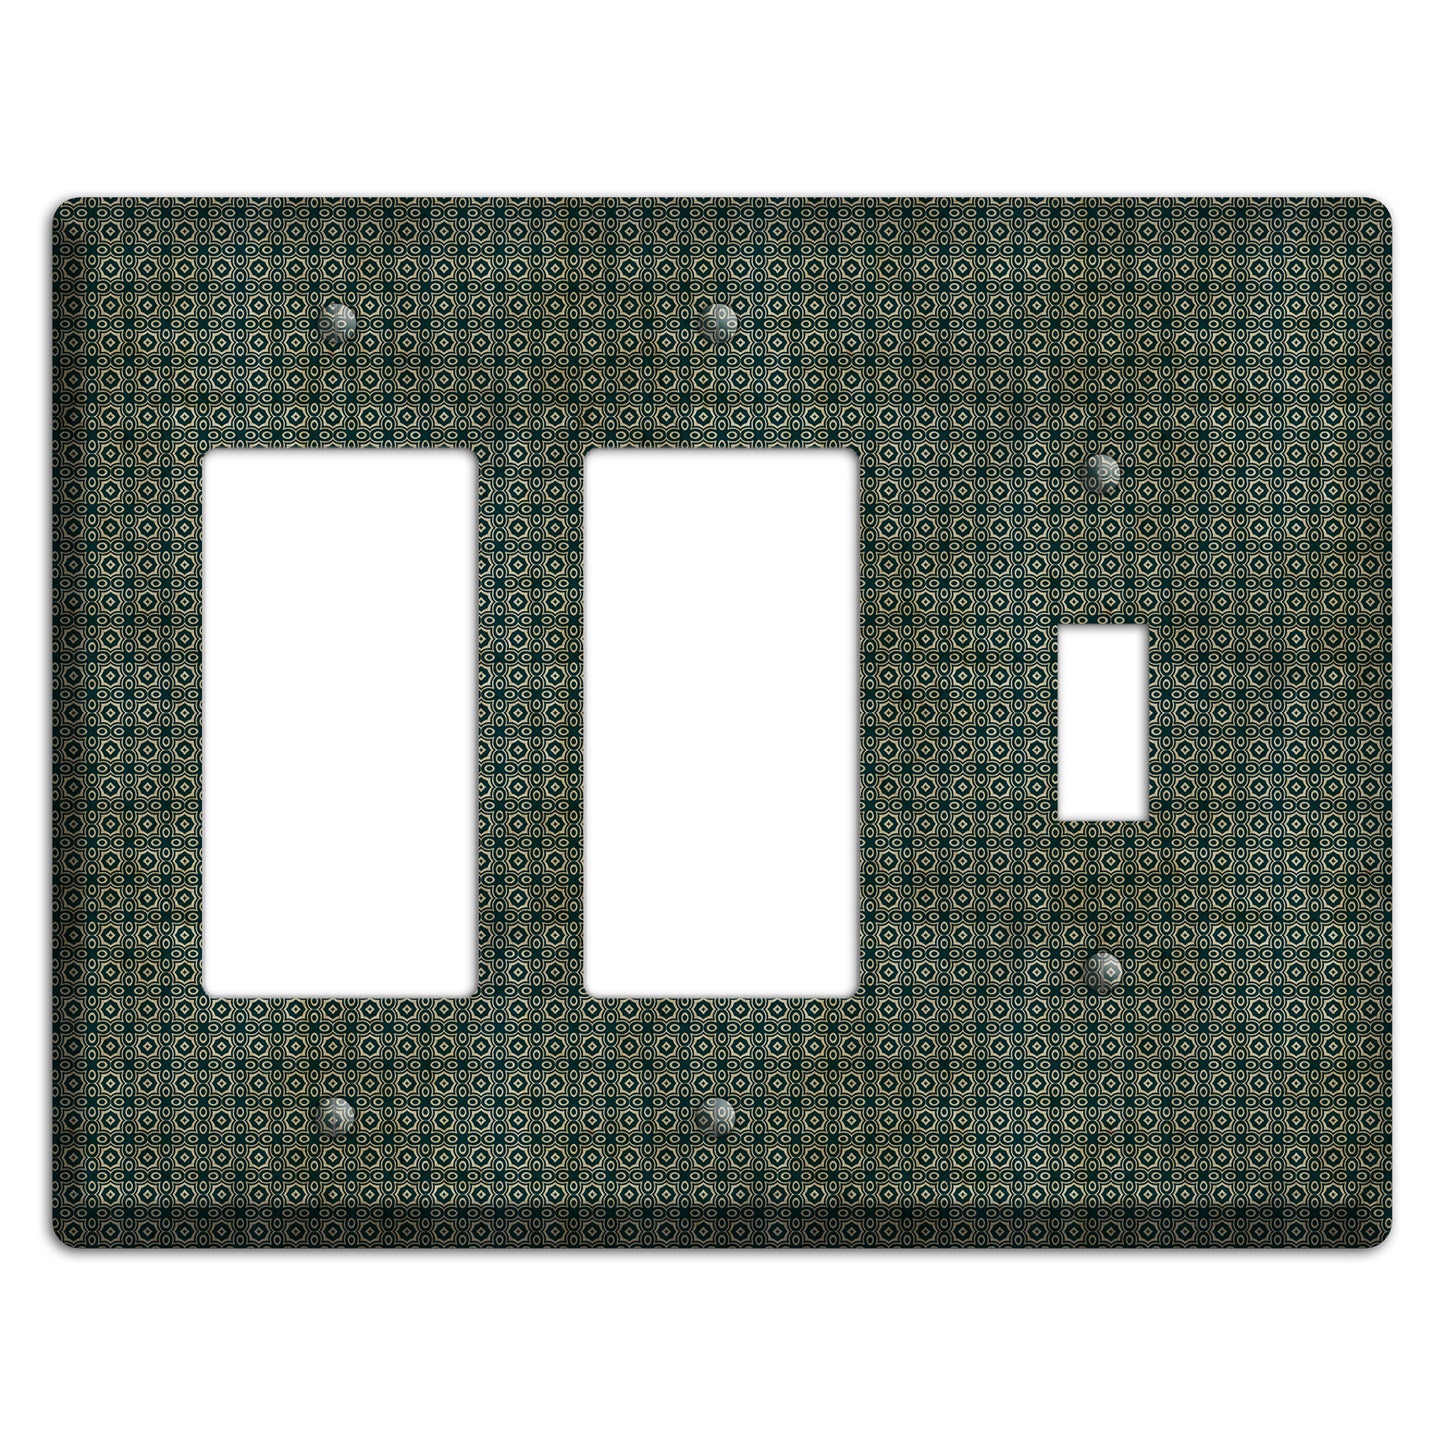 Dark Green Grunge Tiny Tiled Tapestry 2 Rocker / Toggle Wallplate